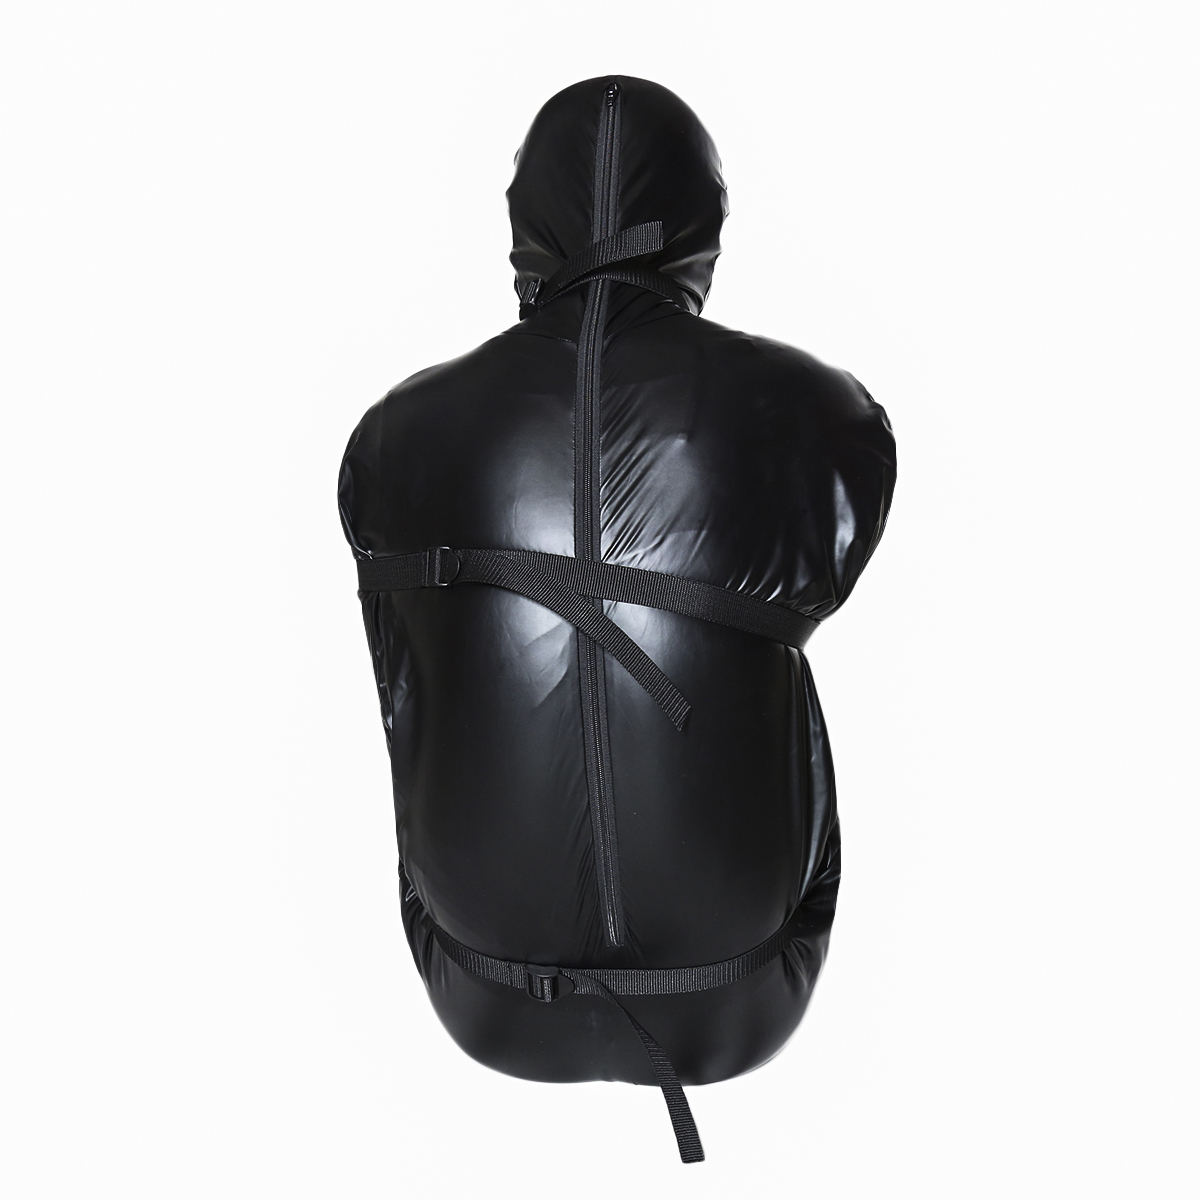 Body-Bag-Full-Cover-Straitjacket-L-OPR-321111-1